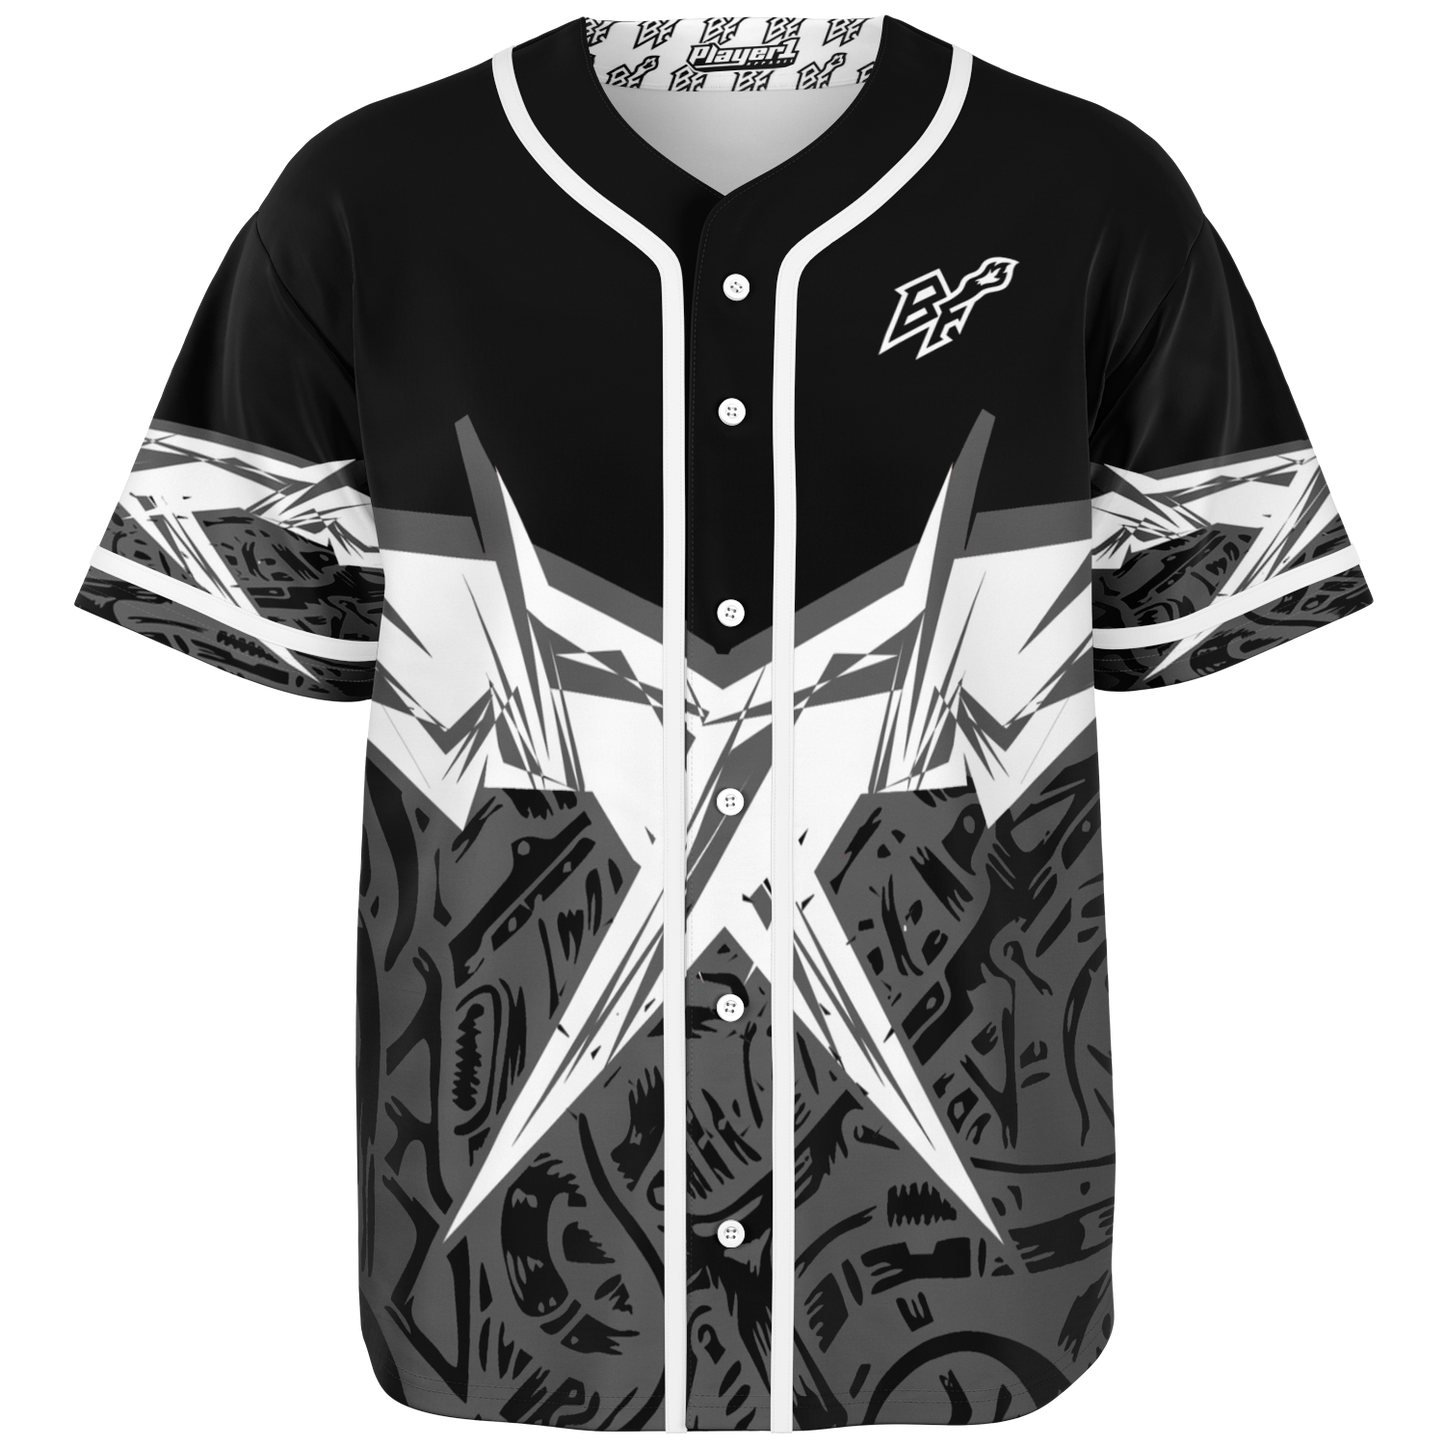 BlackFox Baseball Jersey